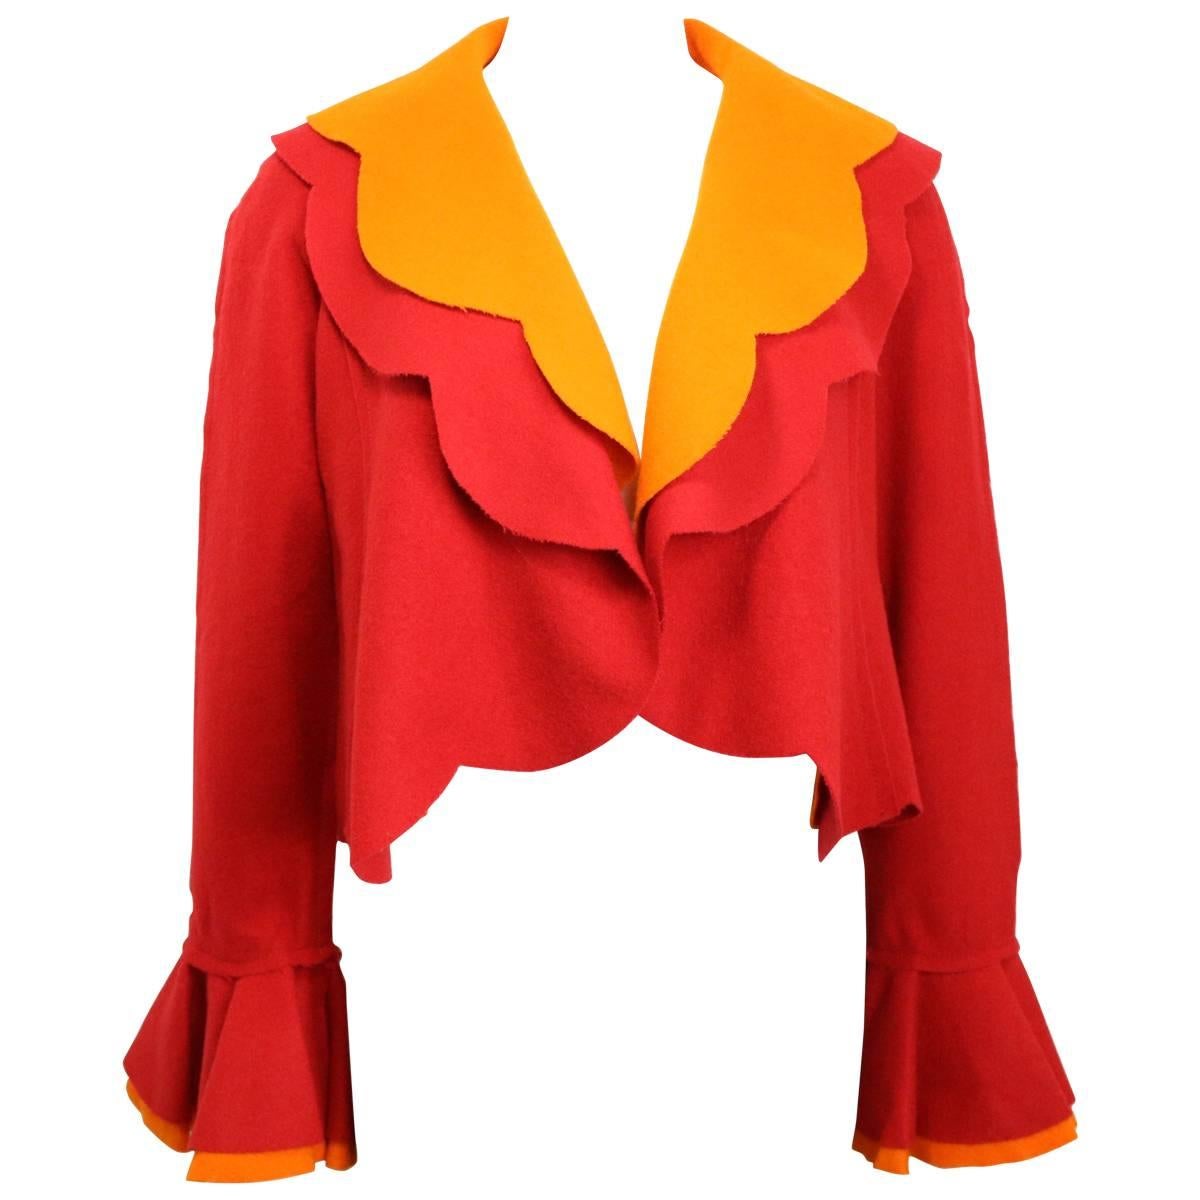 Moschino Couture Chaqueta de lana roja y naranja recortada con volantes 